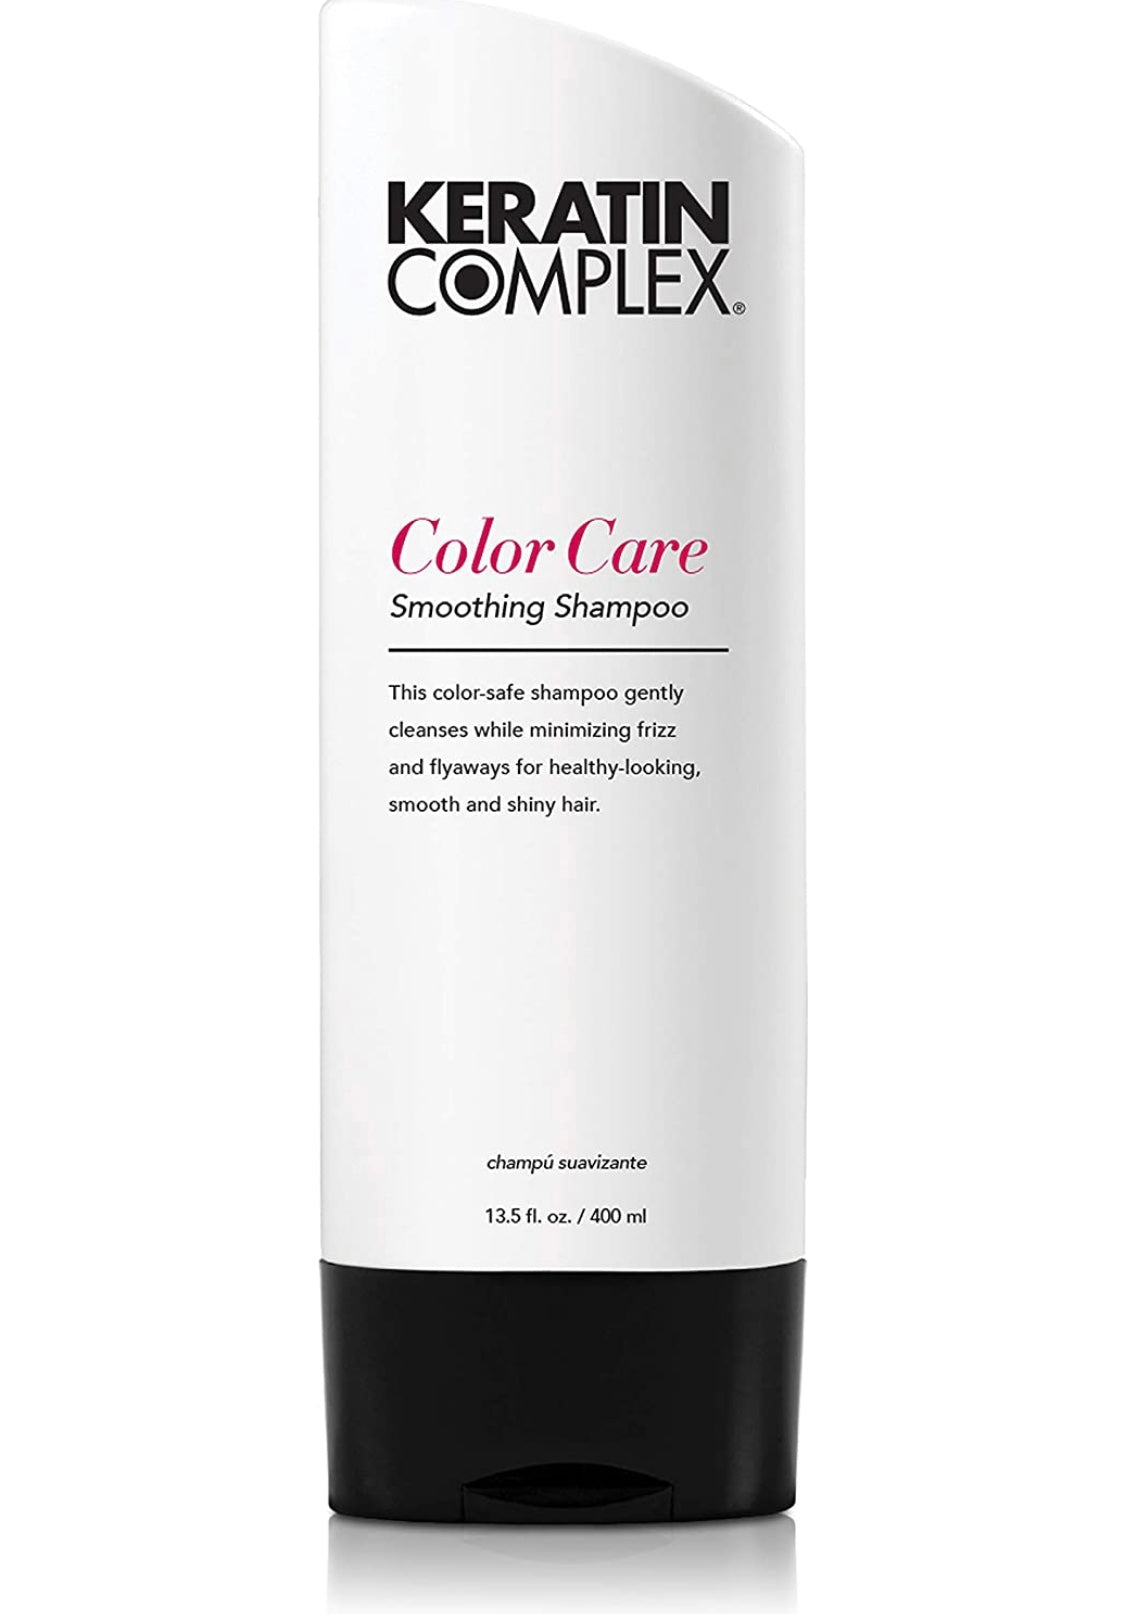 Keratin complex - Color Care shampoo 13.5 fl. oz./ 400 ml